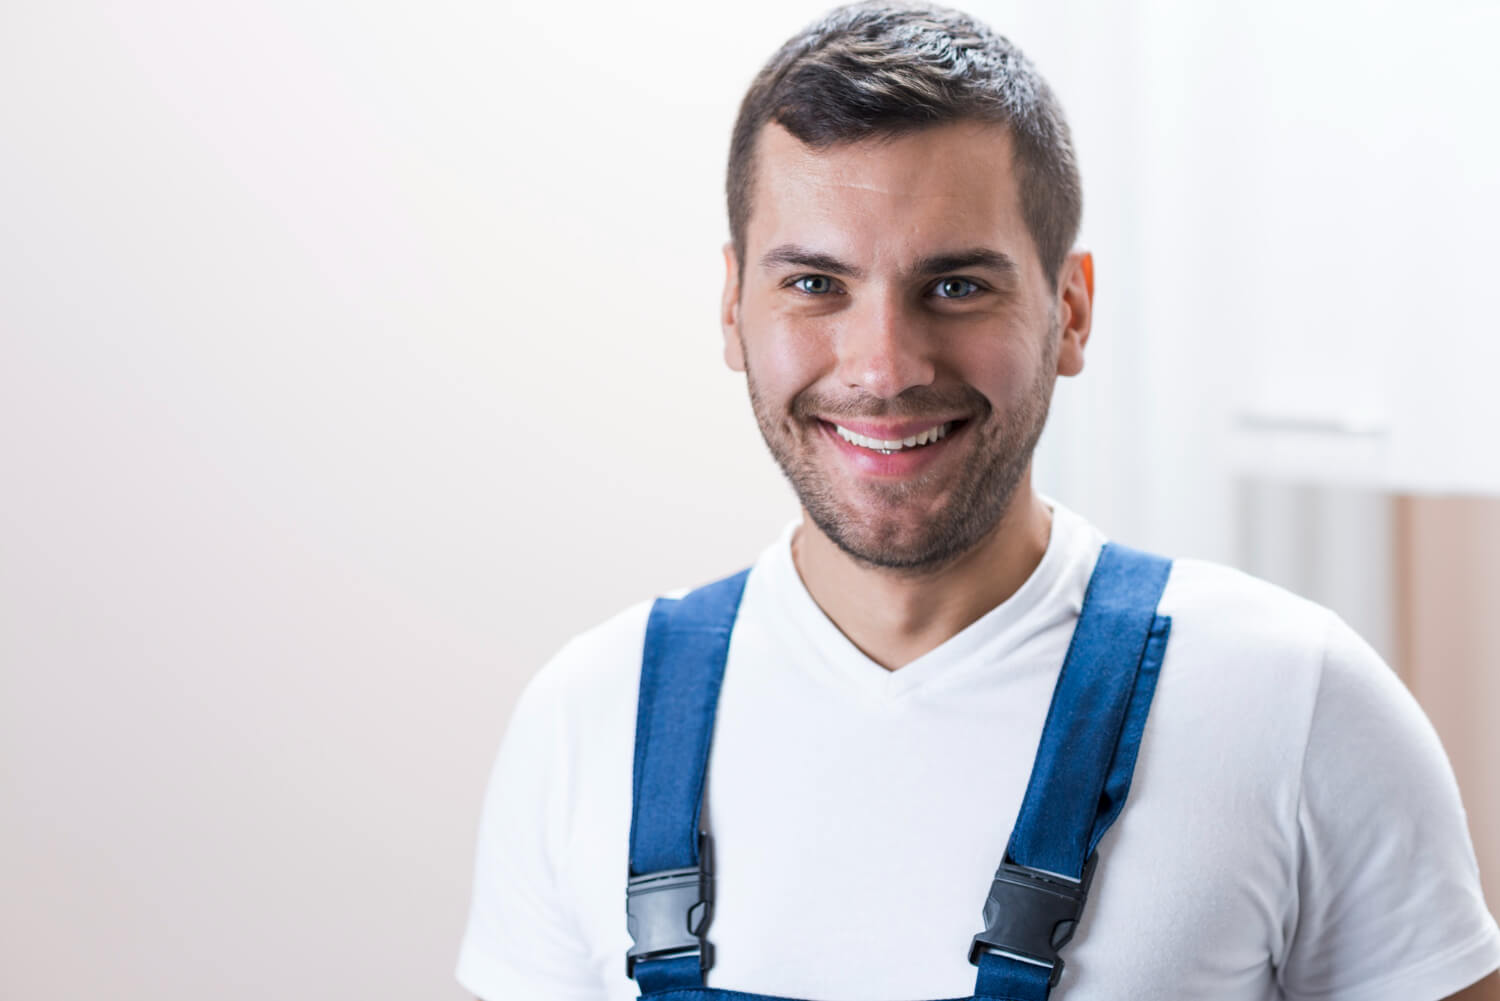 plumber closeup smiling in blue uniform